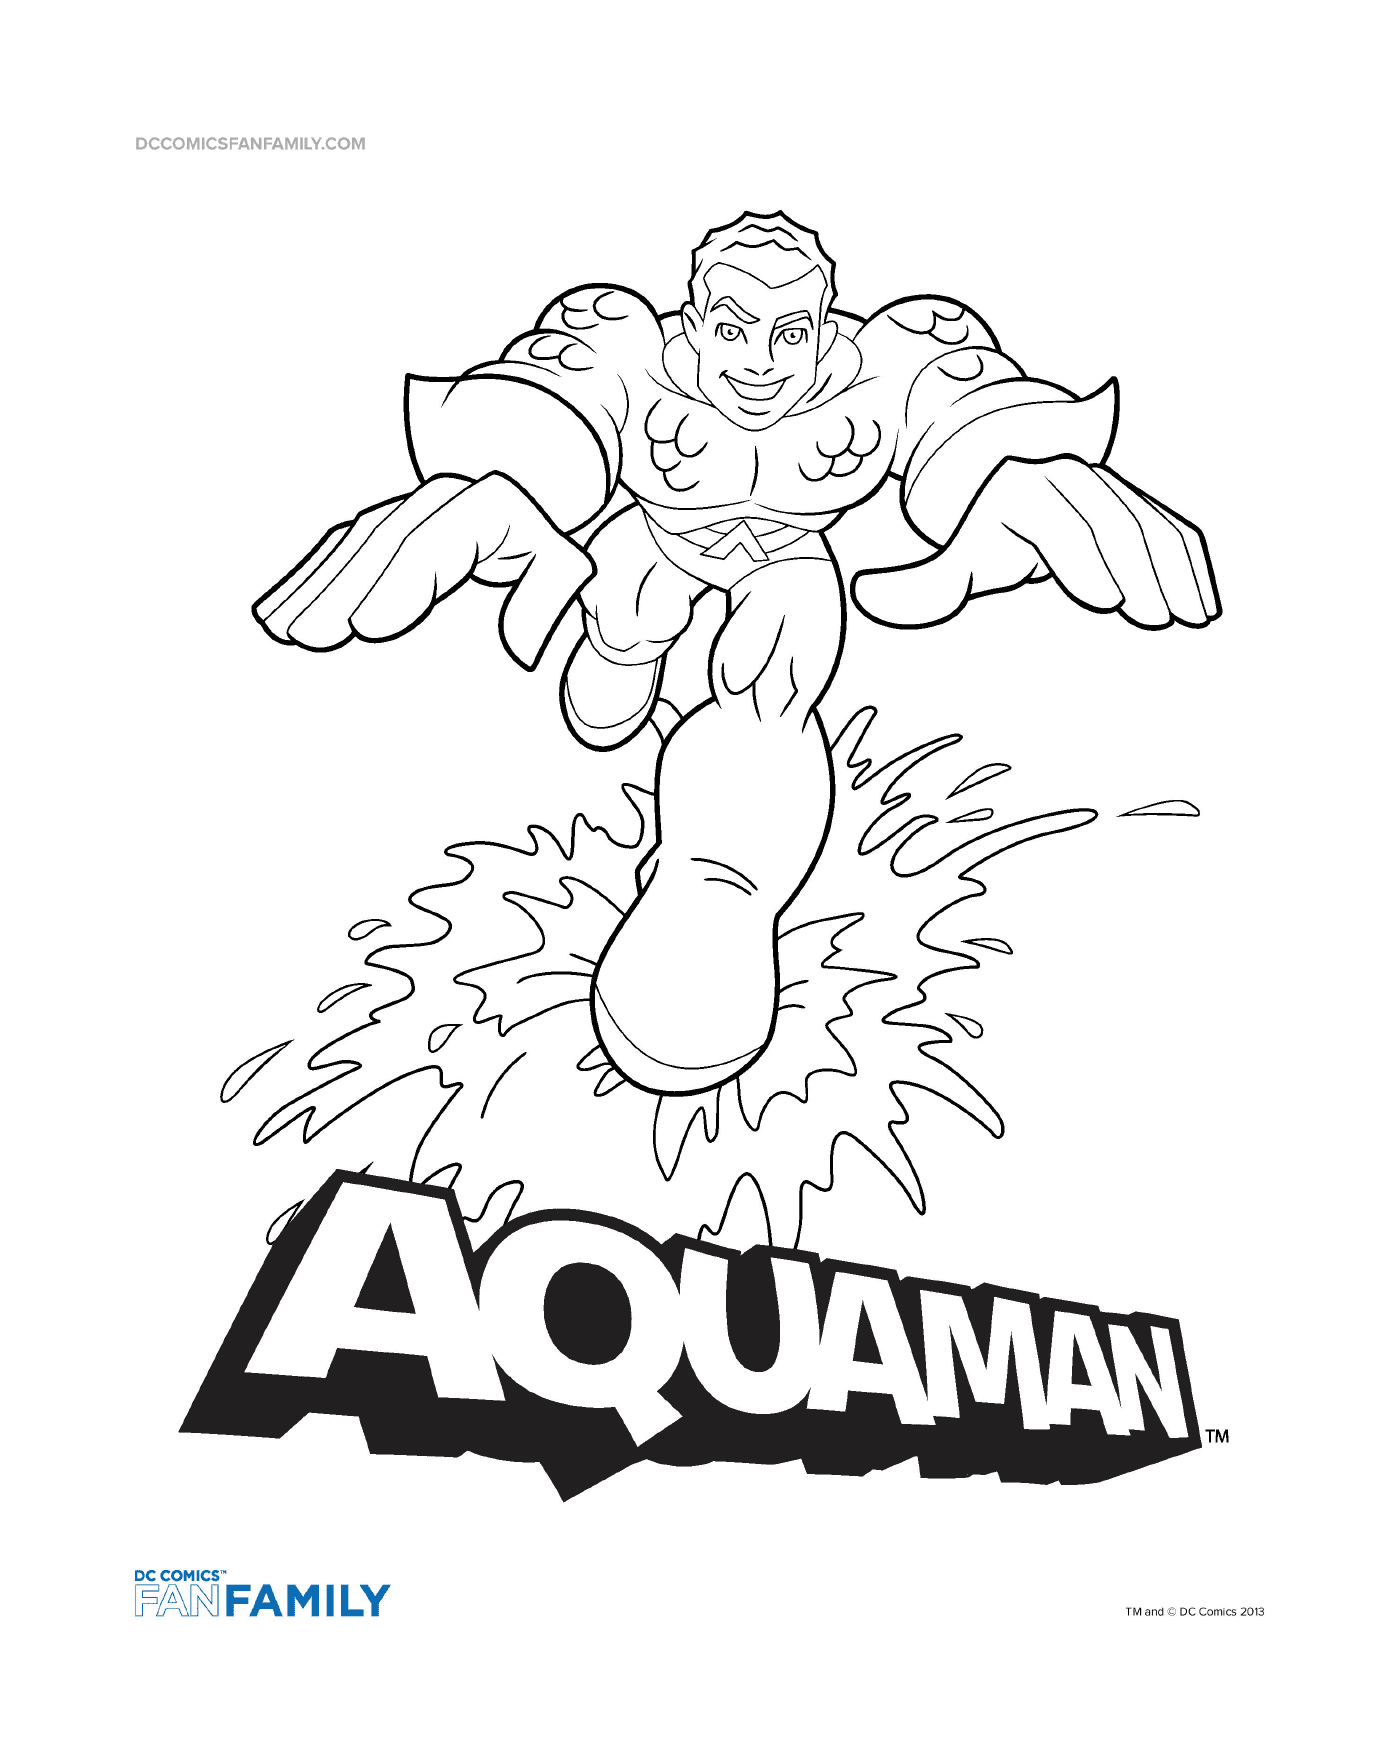  Aquaman hero of DC Comics 